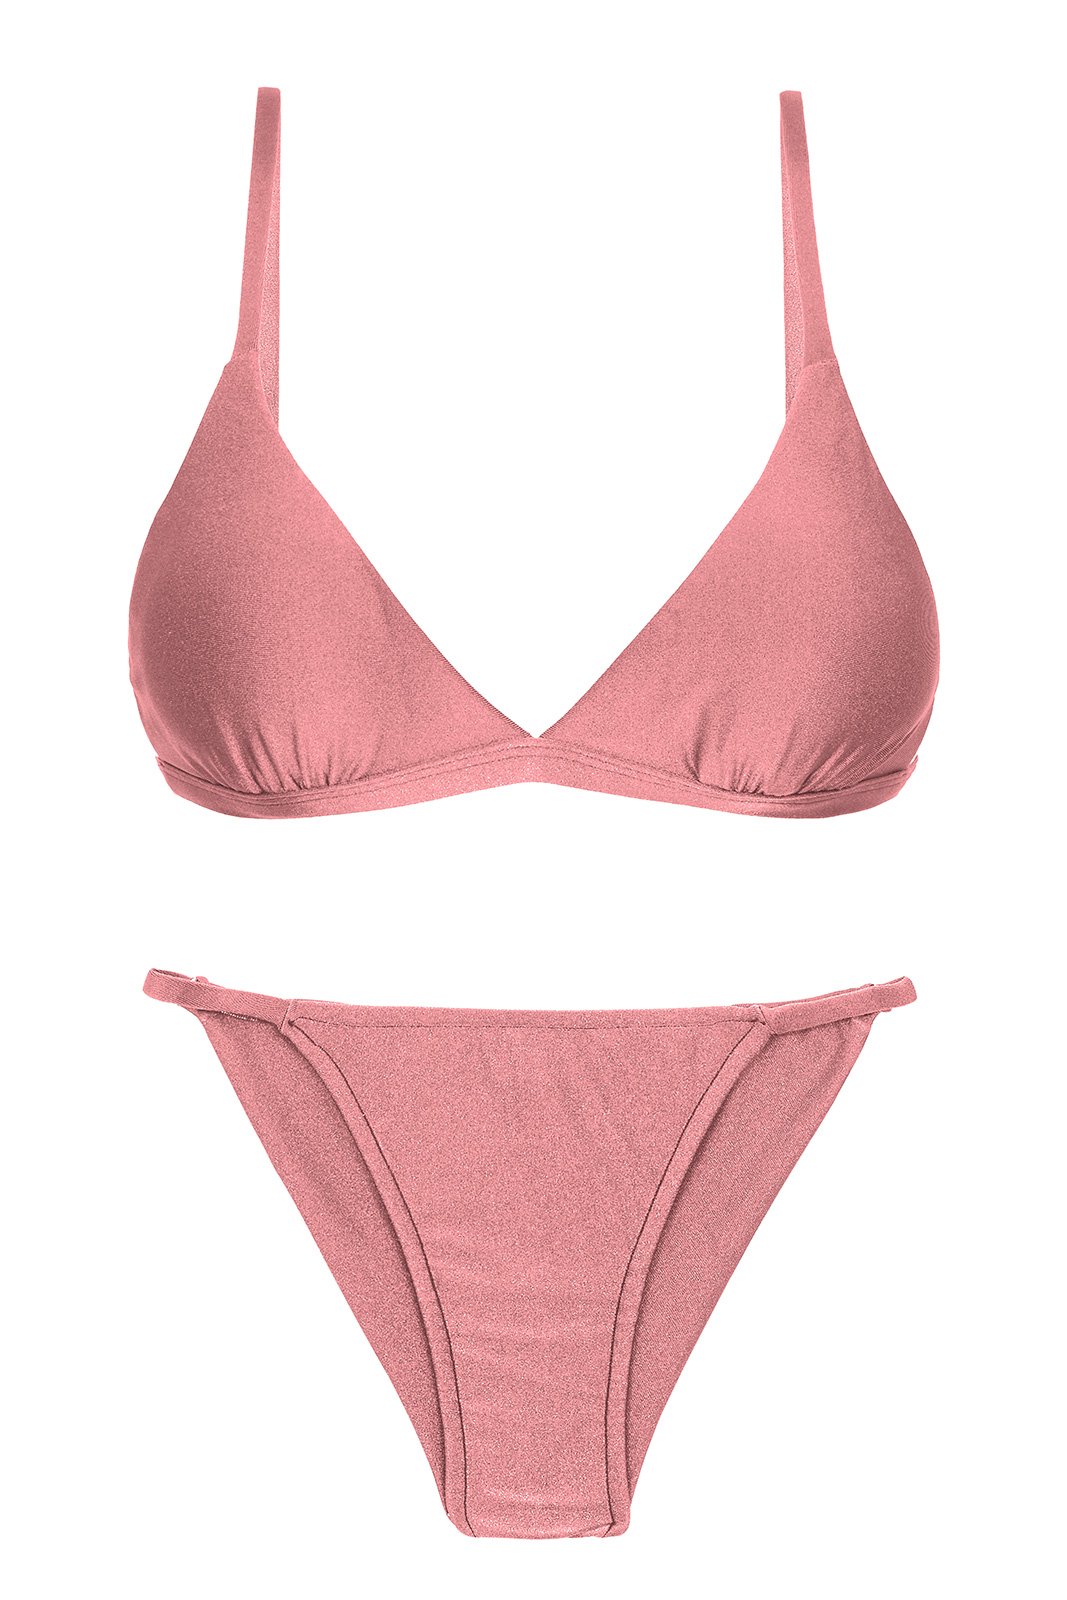 nude-rose-cheeky-brazilian-bikini-with-slim-sides-set-callas-tri-fixo